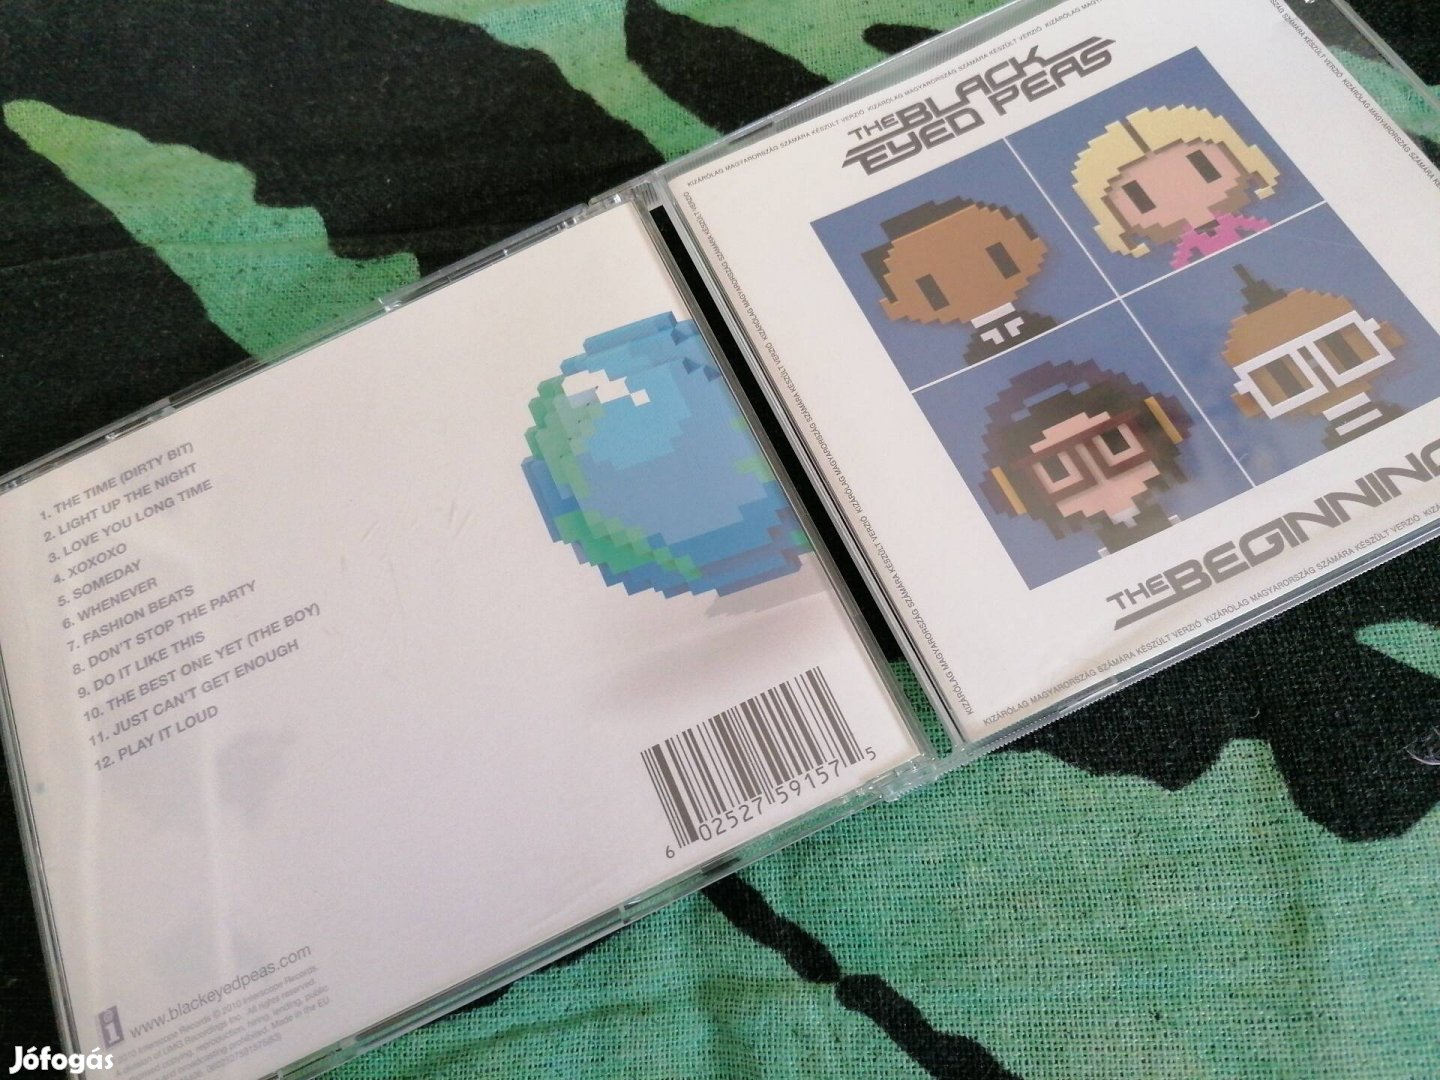 The Black Eyed Peas - The beginning cd